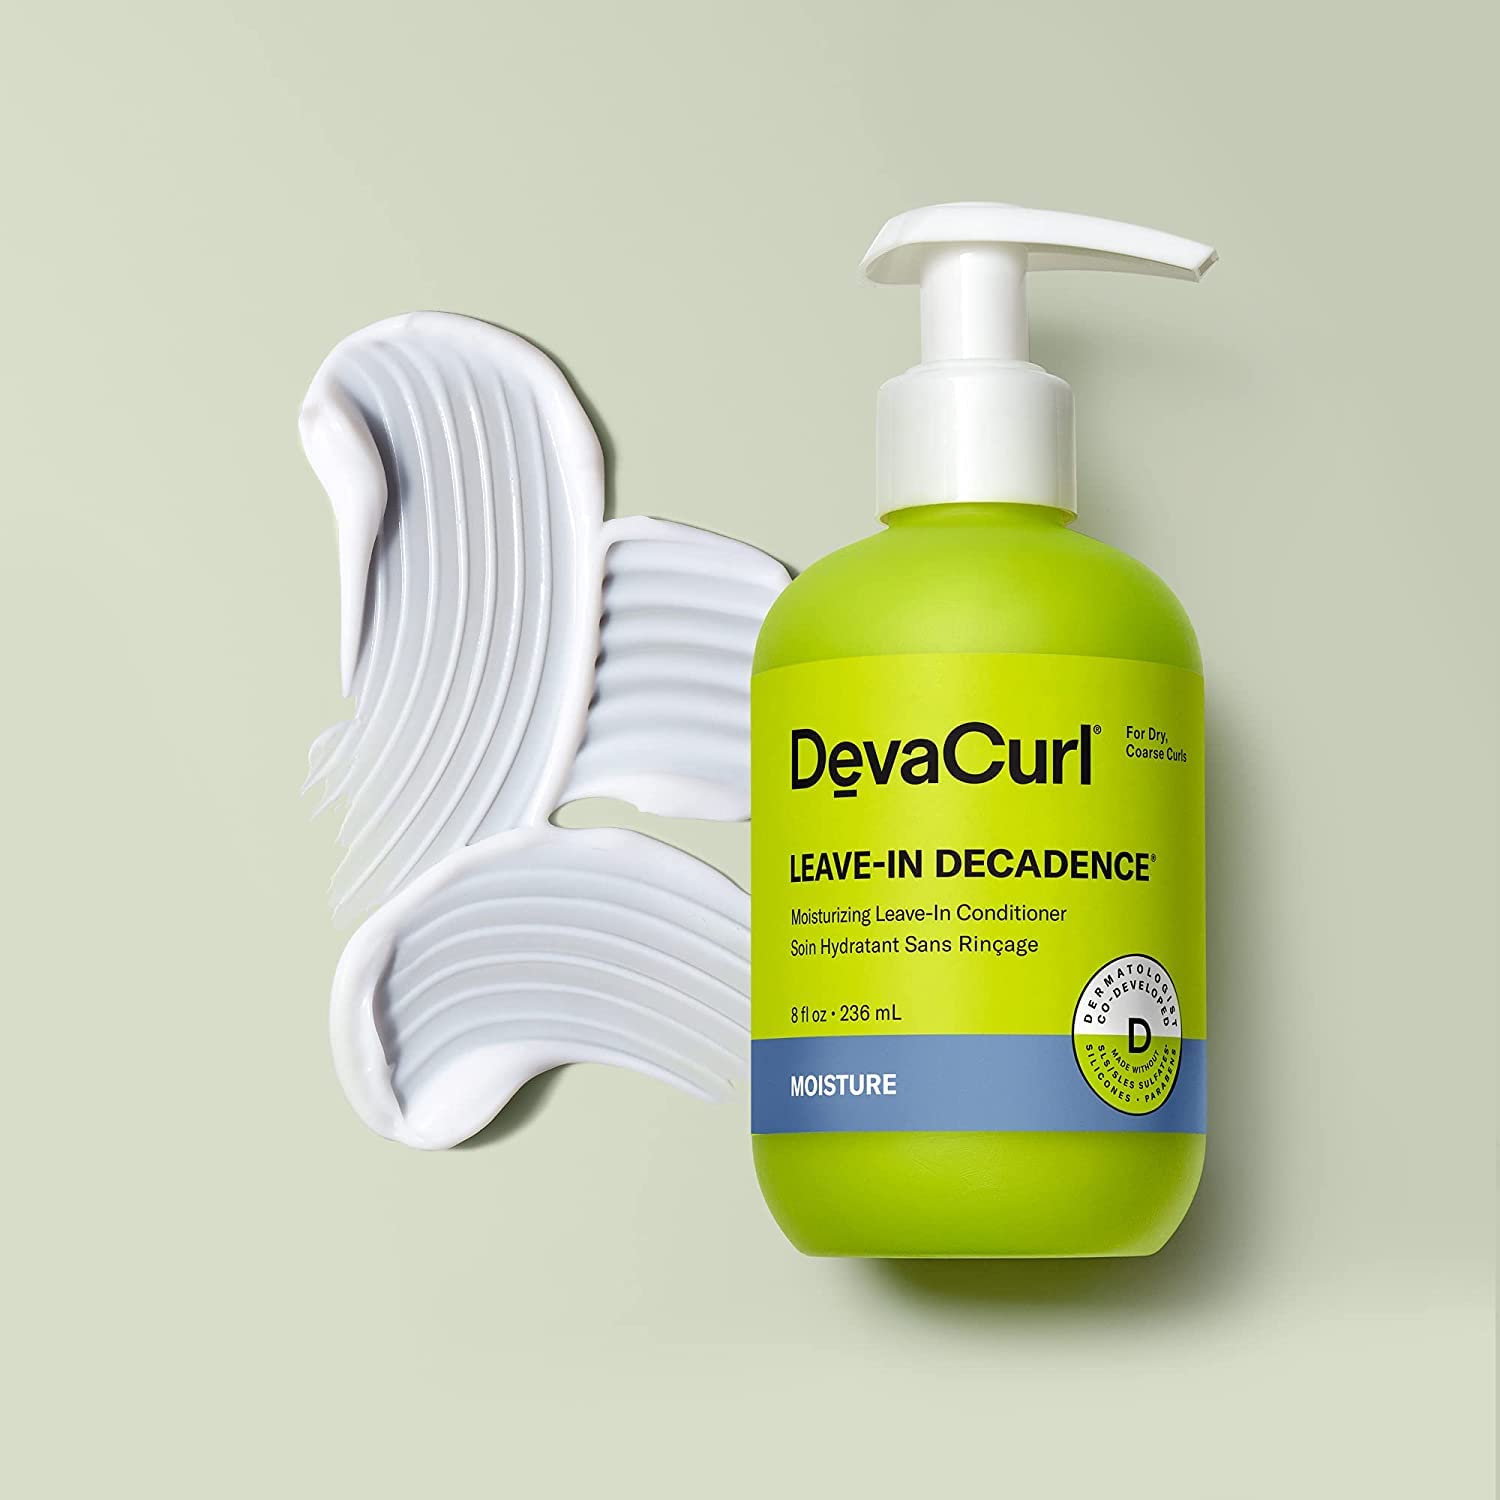 DevaCurl Leave-In Decadence® Moisturizing Leave-In Conditioner, Green Oasis, 8 fl. oz.